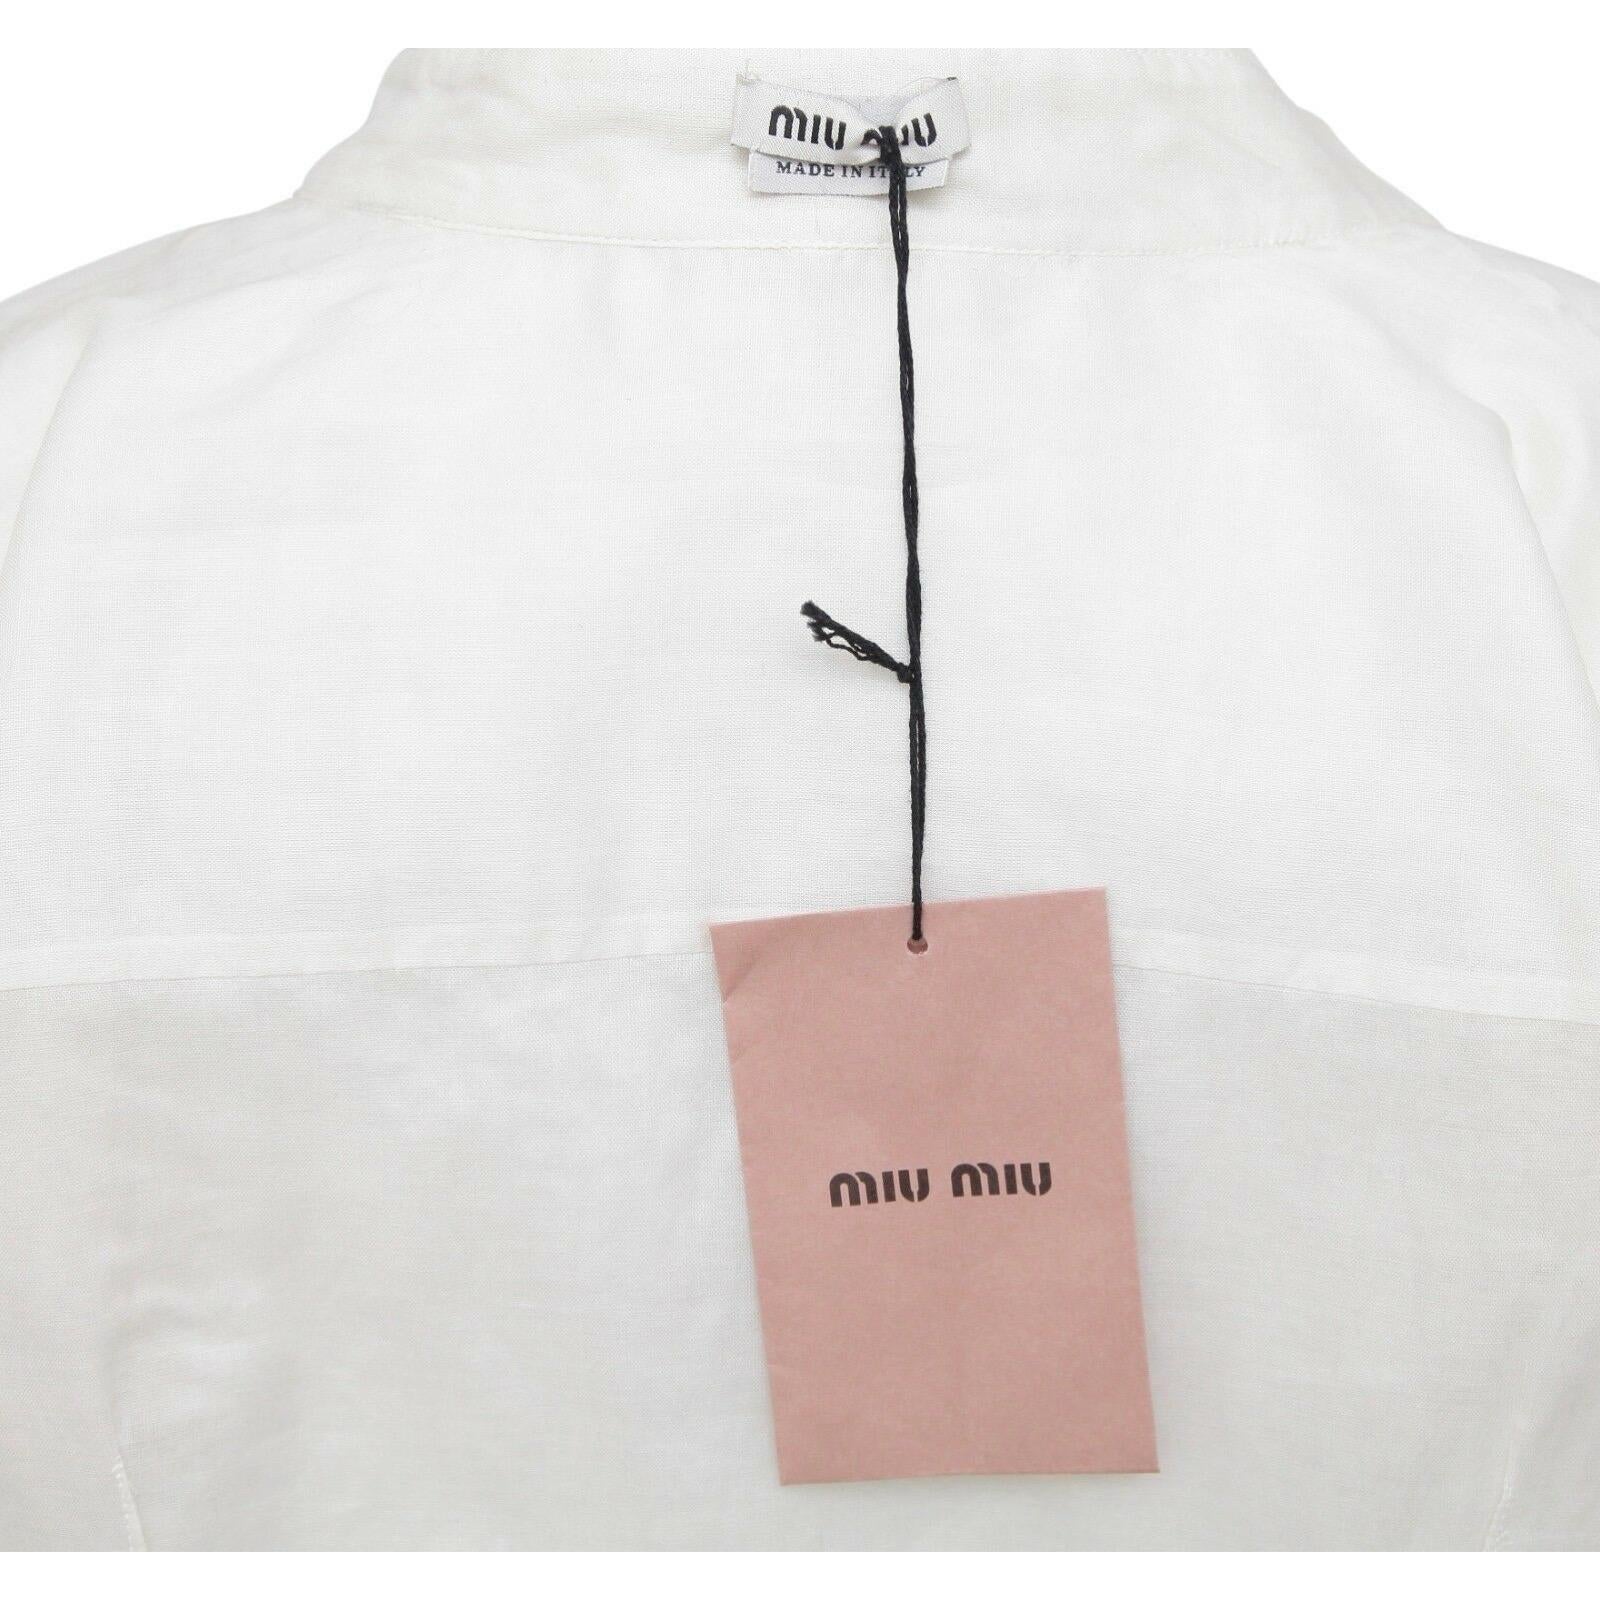 MIU MIU Blouse Shirt Top Button Down Cotton Ivory Short Sleeve Sz 42 For Sale 1